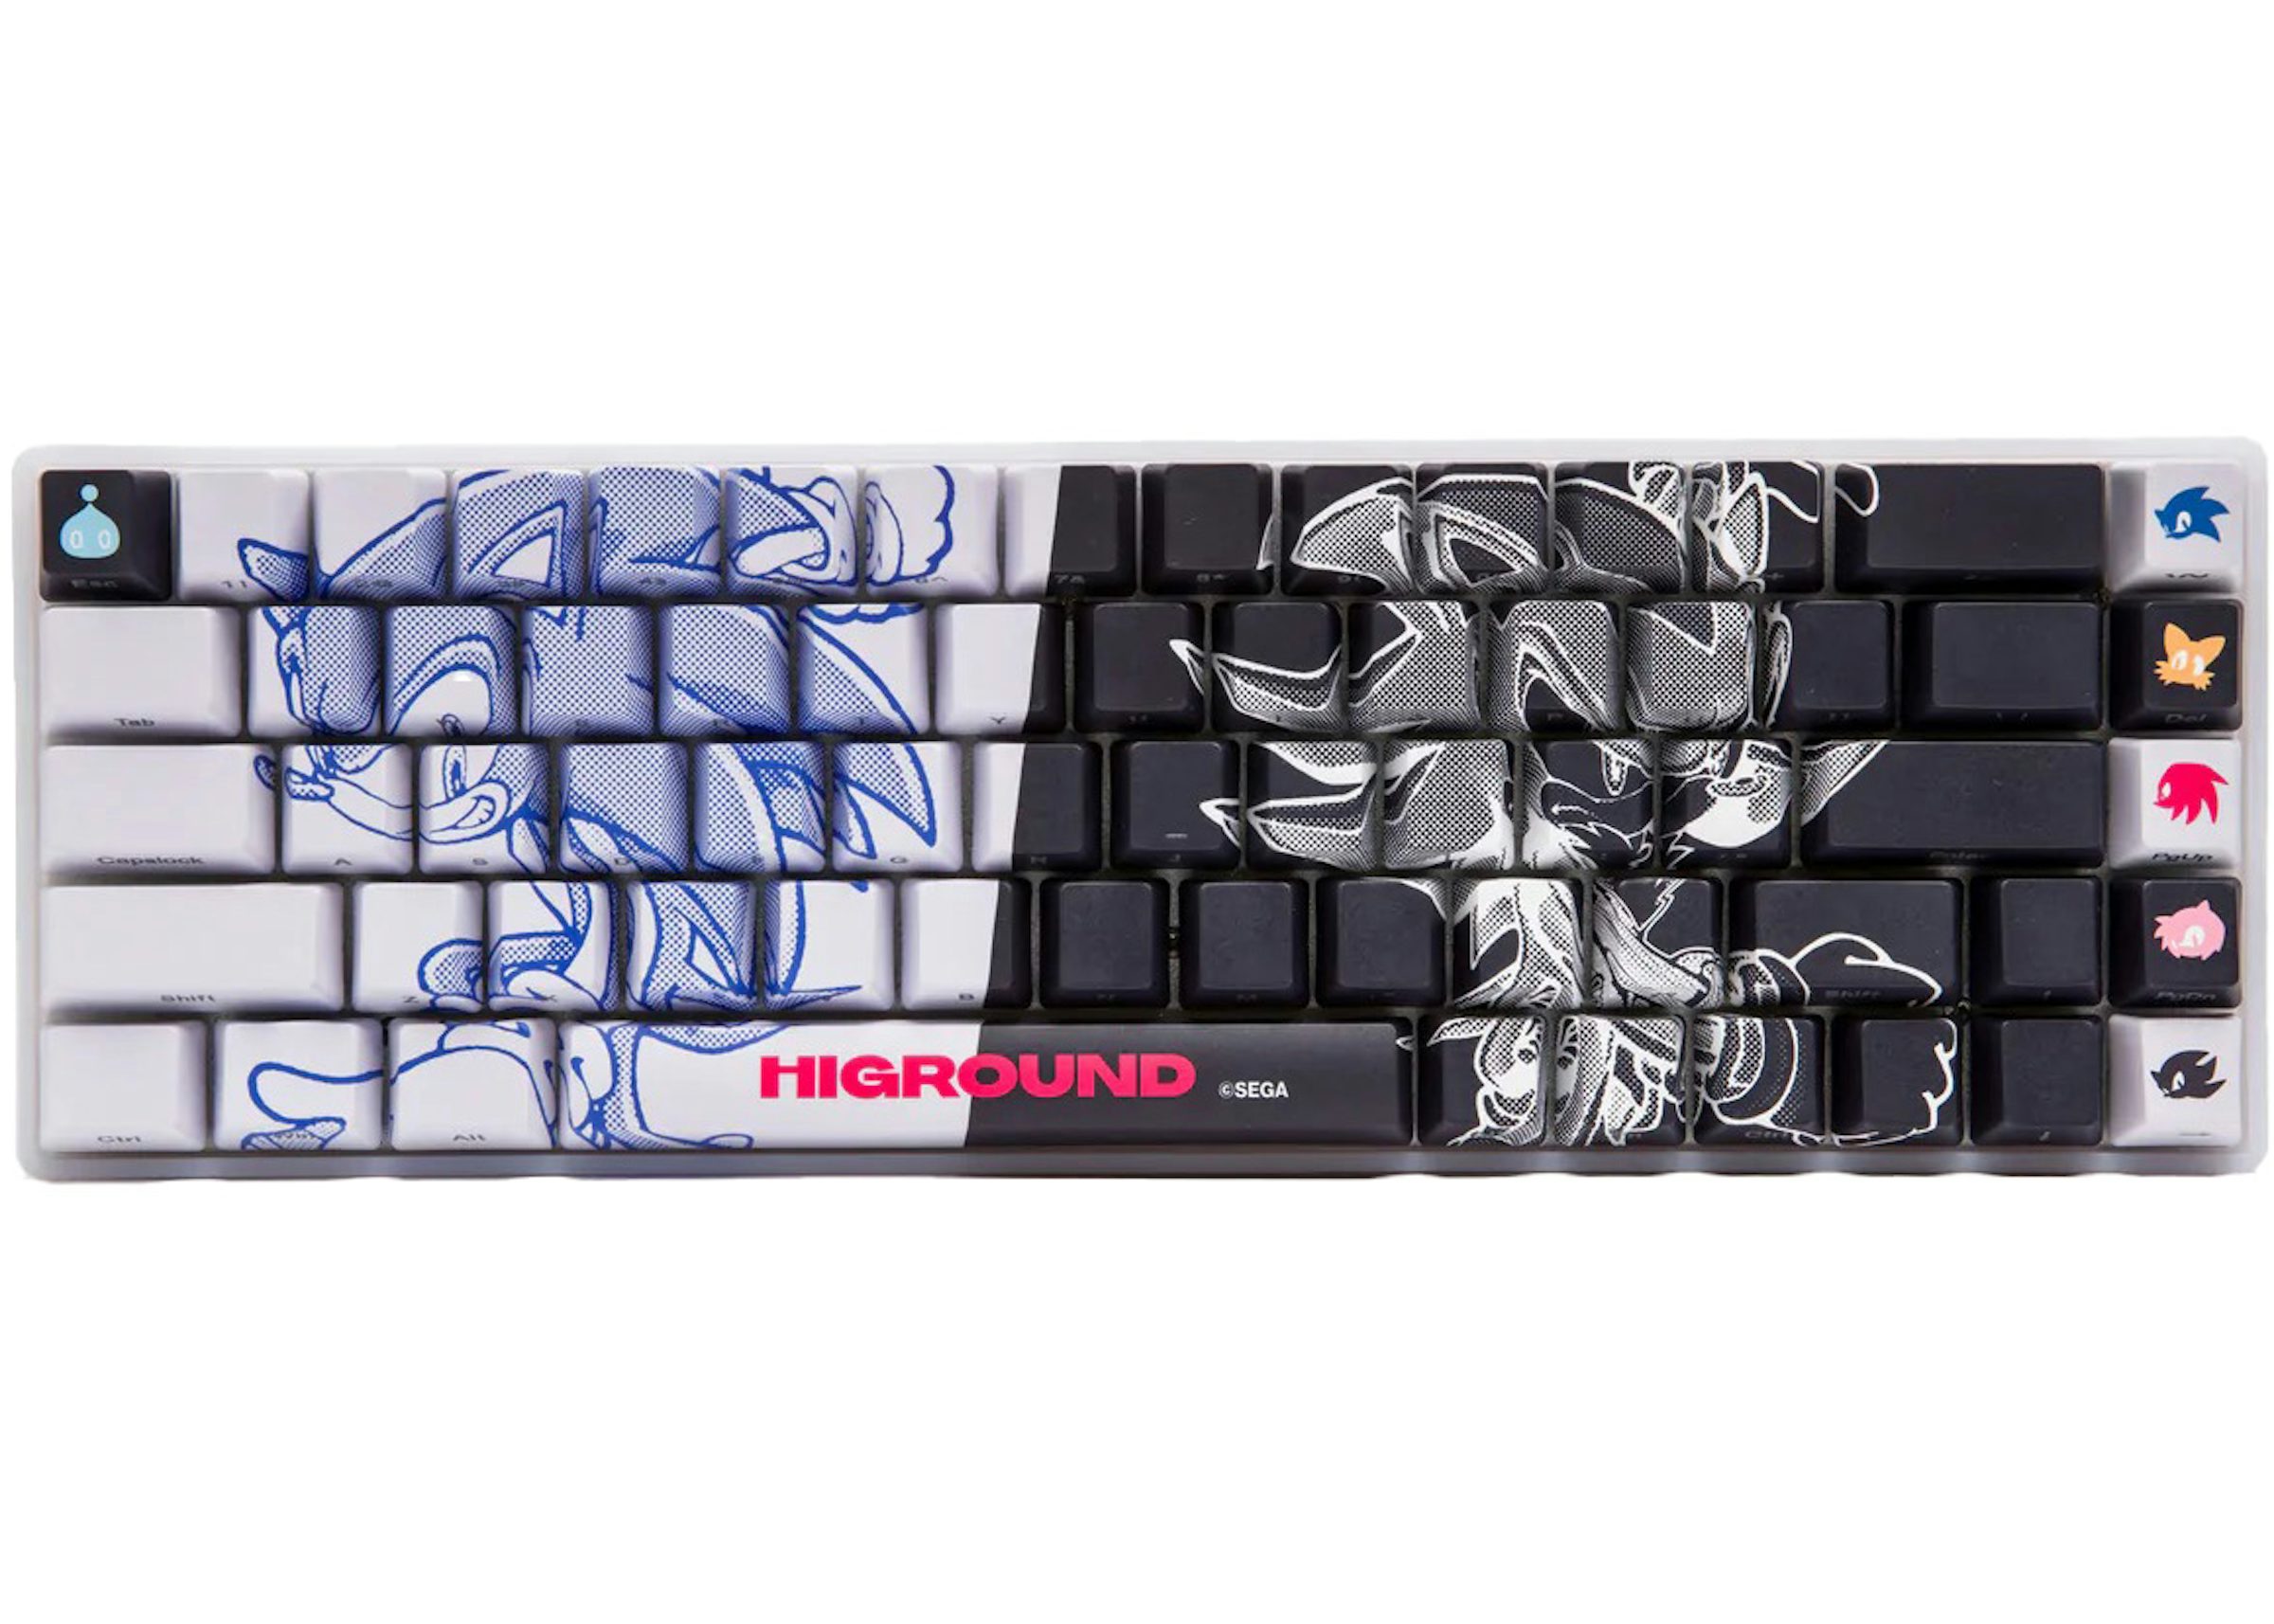 Higround x Sonic the Hedgehog Adventure Keyboard Gray/Black - US